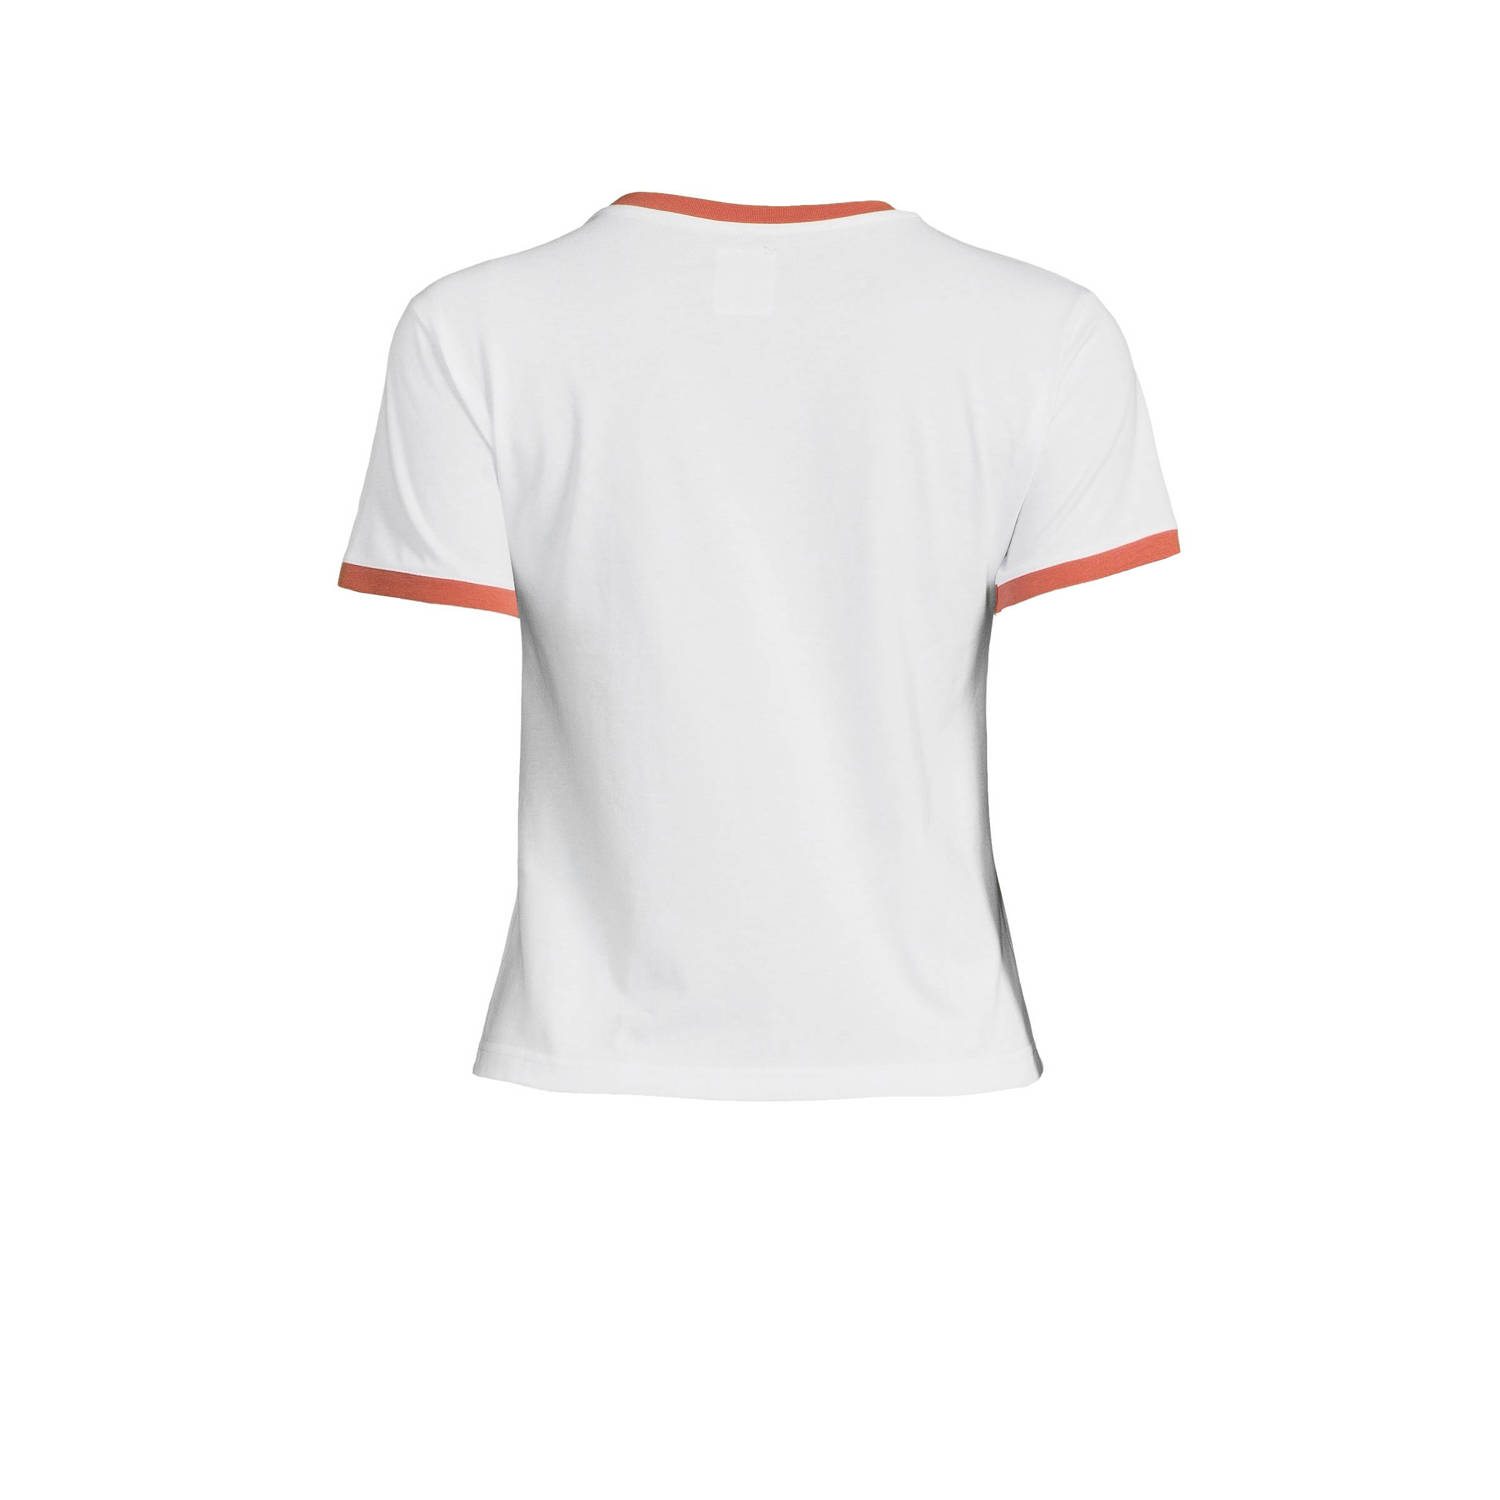 Lois T-shirt Emma met contrastbies wit oranje